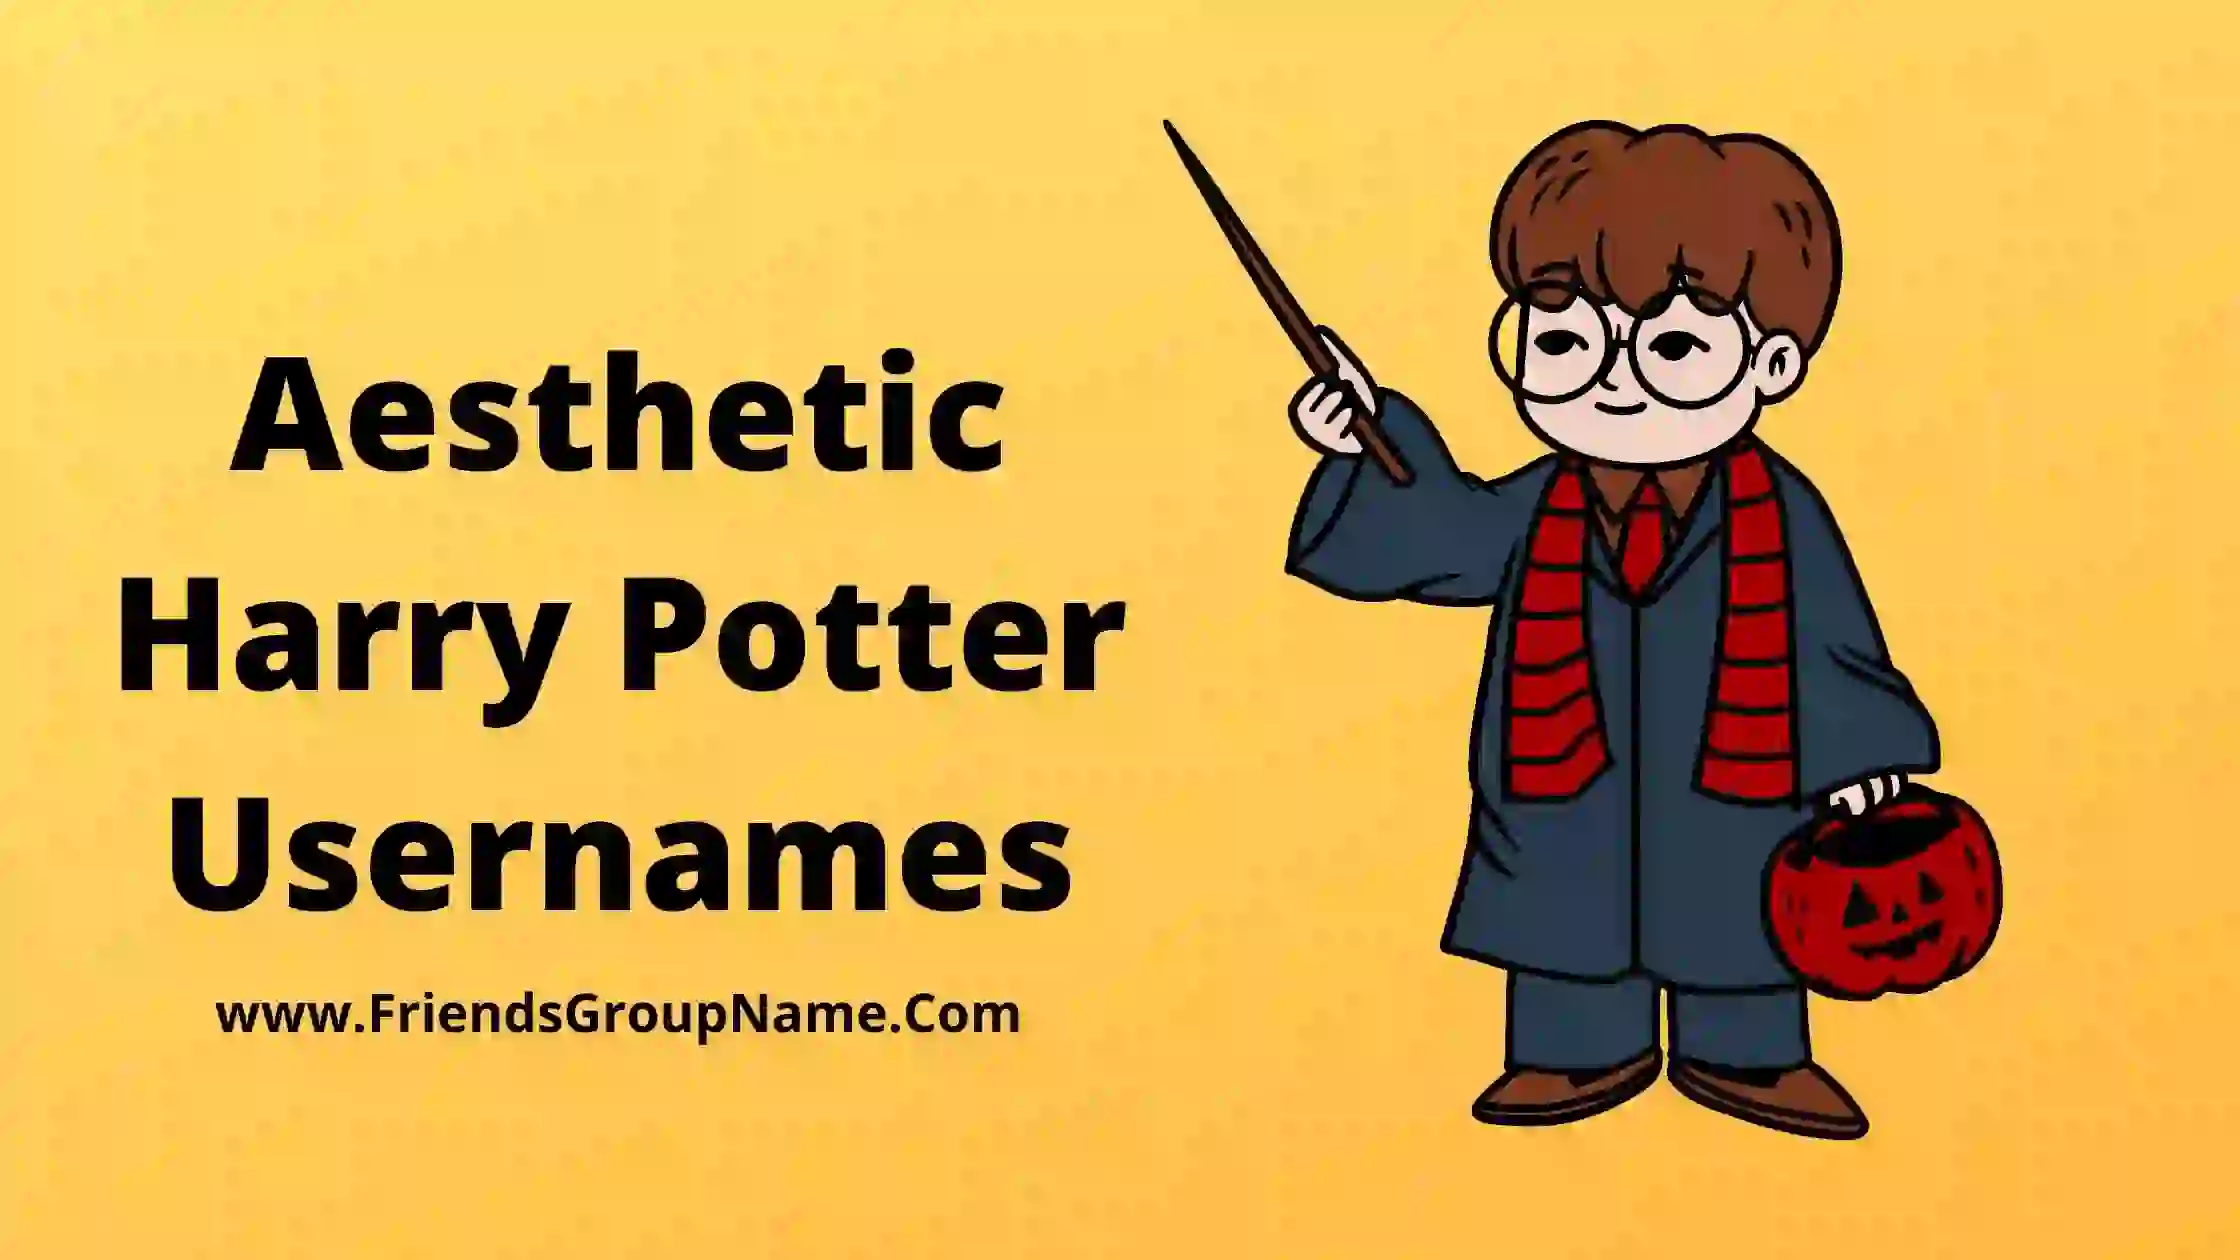 Aesthetic Harry Potter Usernames